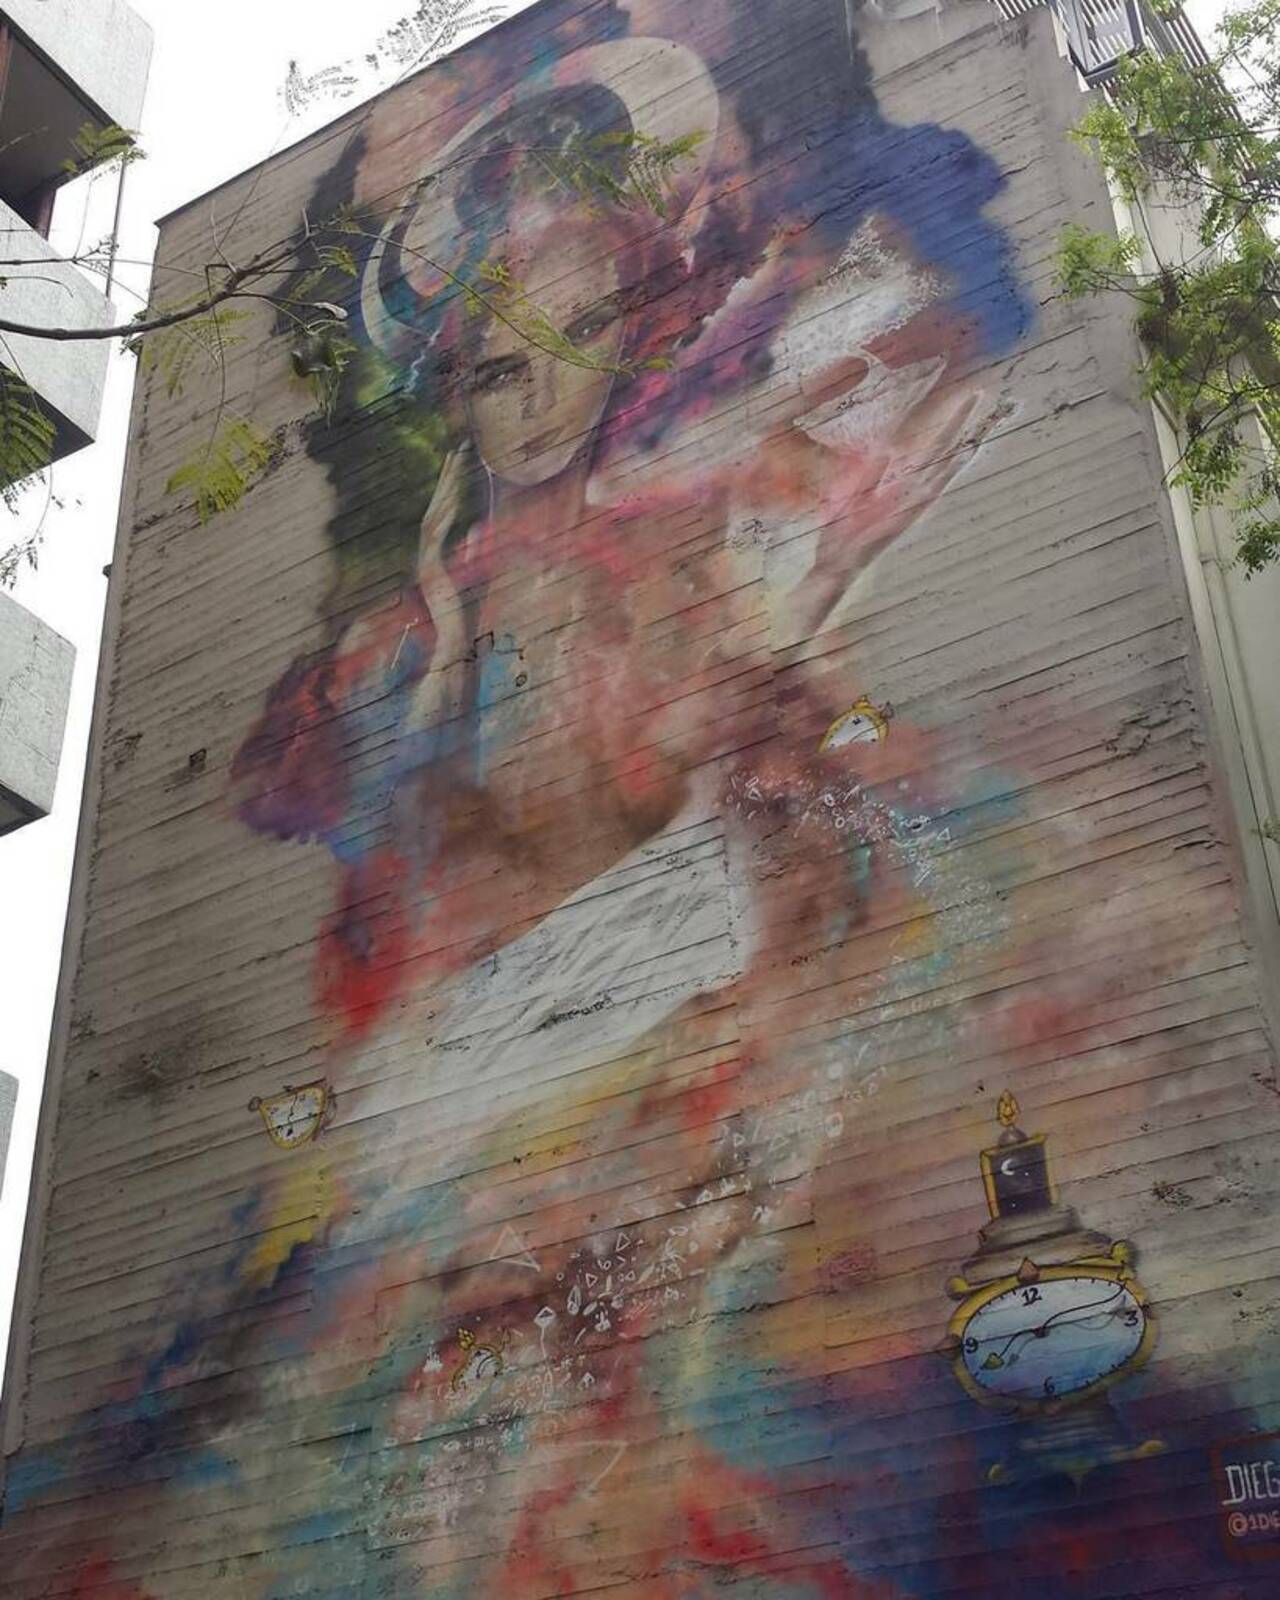 #graffiti #streetart #muralism #graffiti #art #urban #wall #artecallejero #Chile #bellasar… http://ift.tt/1ZVMFaU https://t.co/BrZpgJXS52